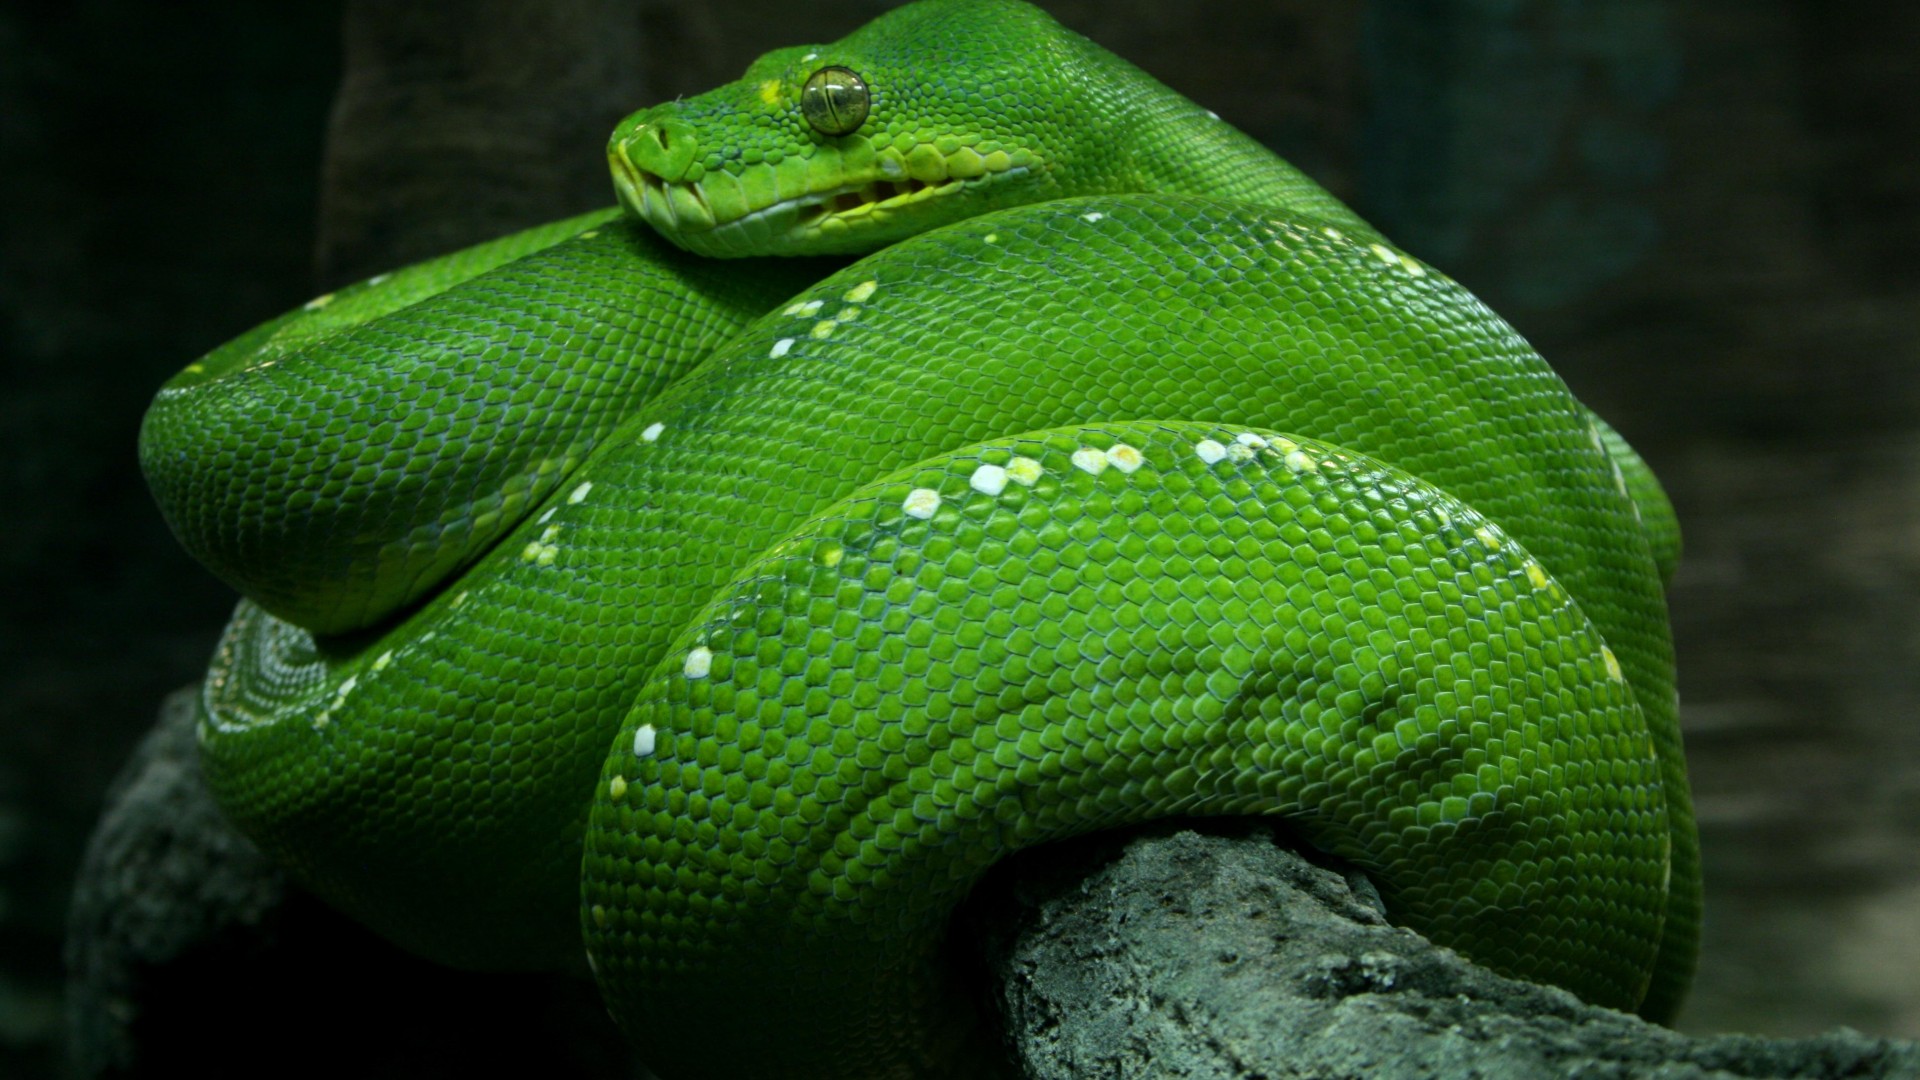 питон, 4k, HD, змея, сингапур, зеленая, глаза, туризм, Python, Singapore, 4k, HD wallpaper, zoo, Emerald, Green, snake, eyes, close-up, tourism (horizontal)